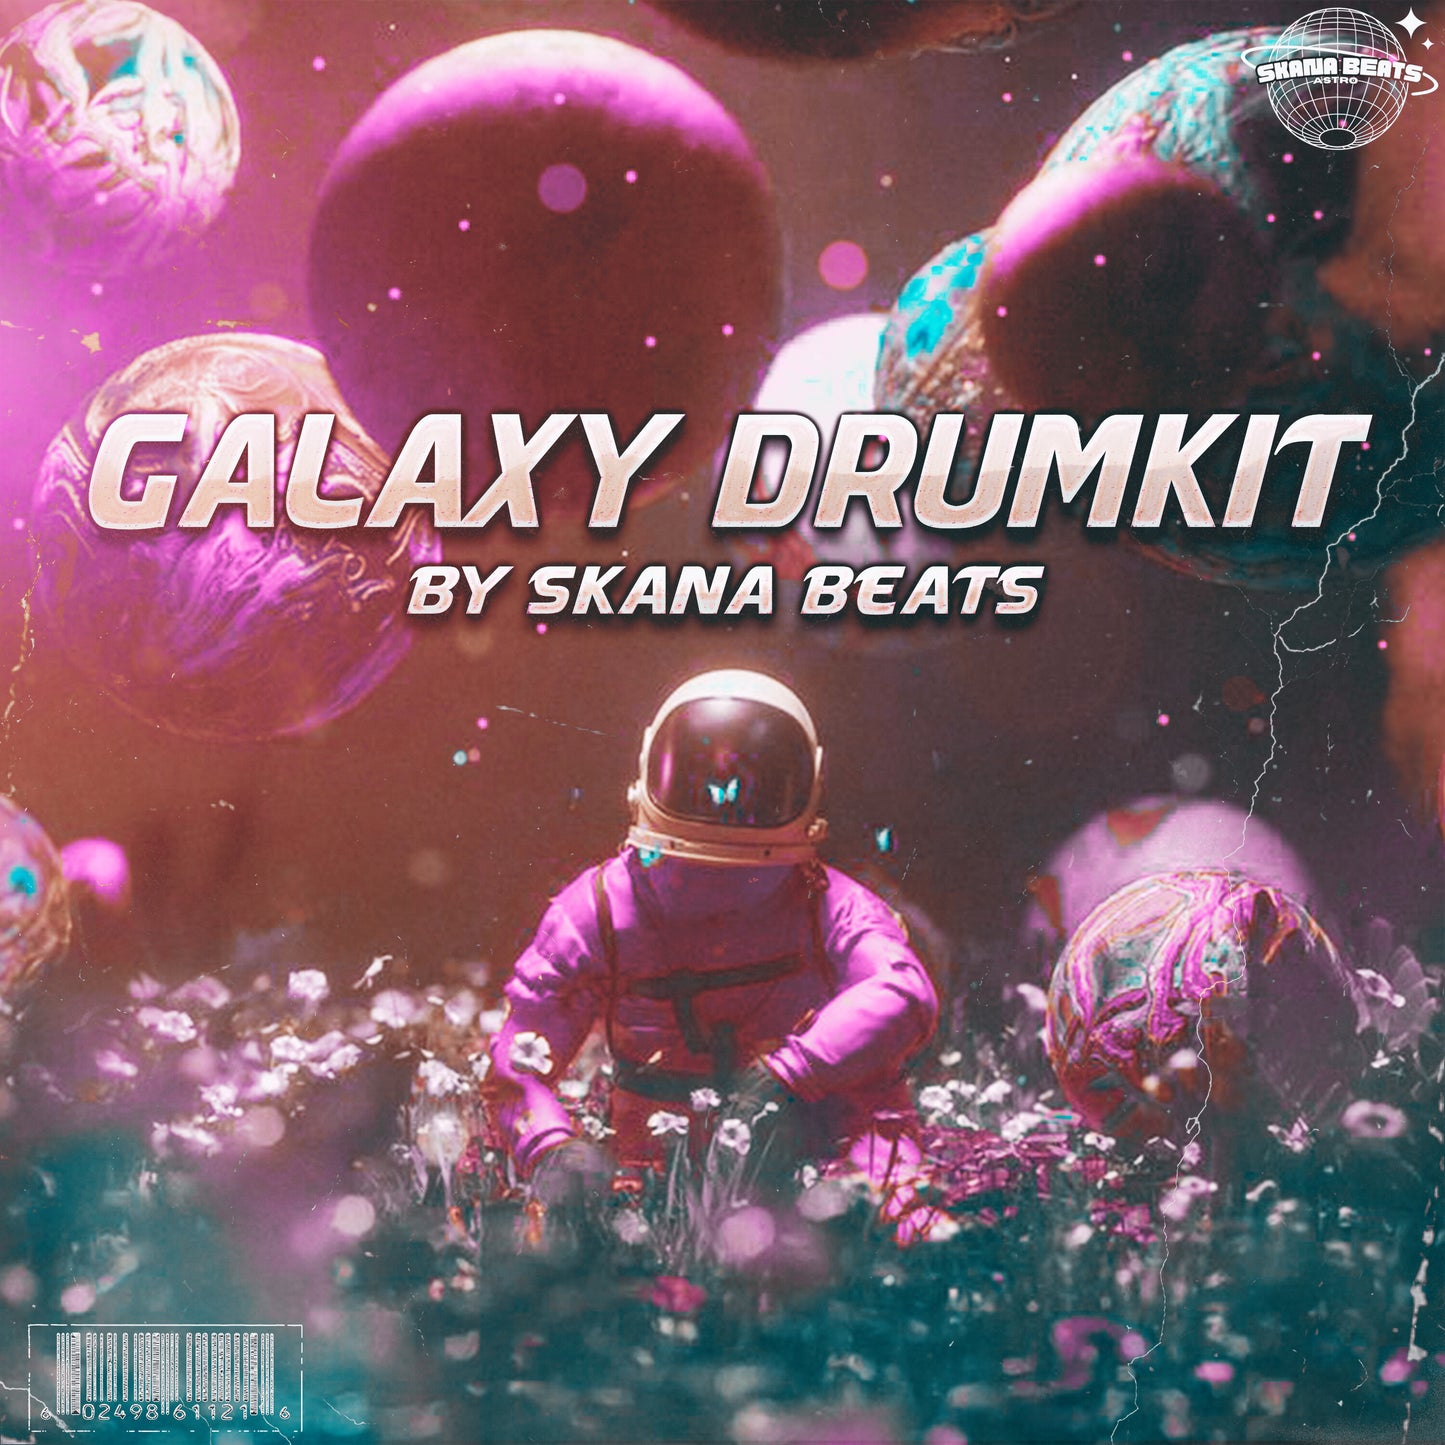 Galaxy Drum Kit